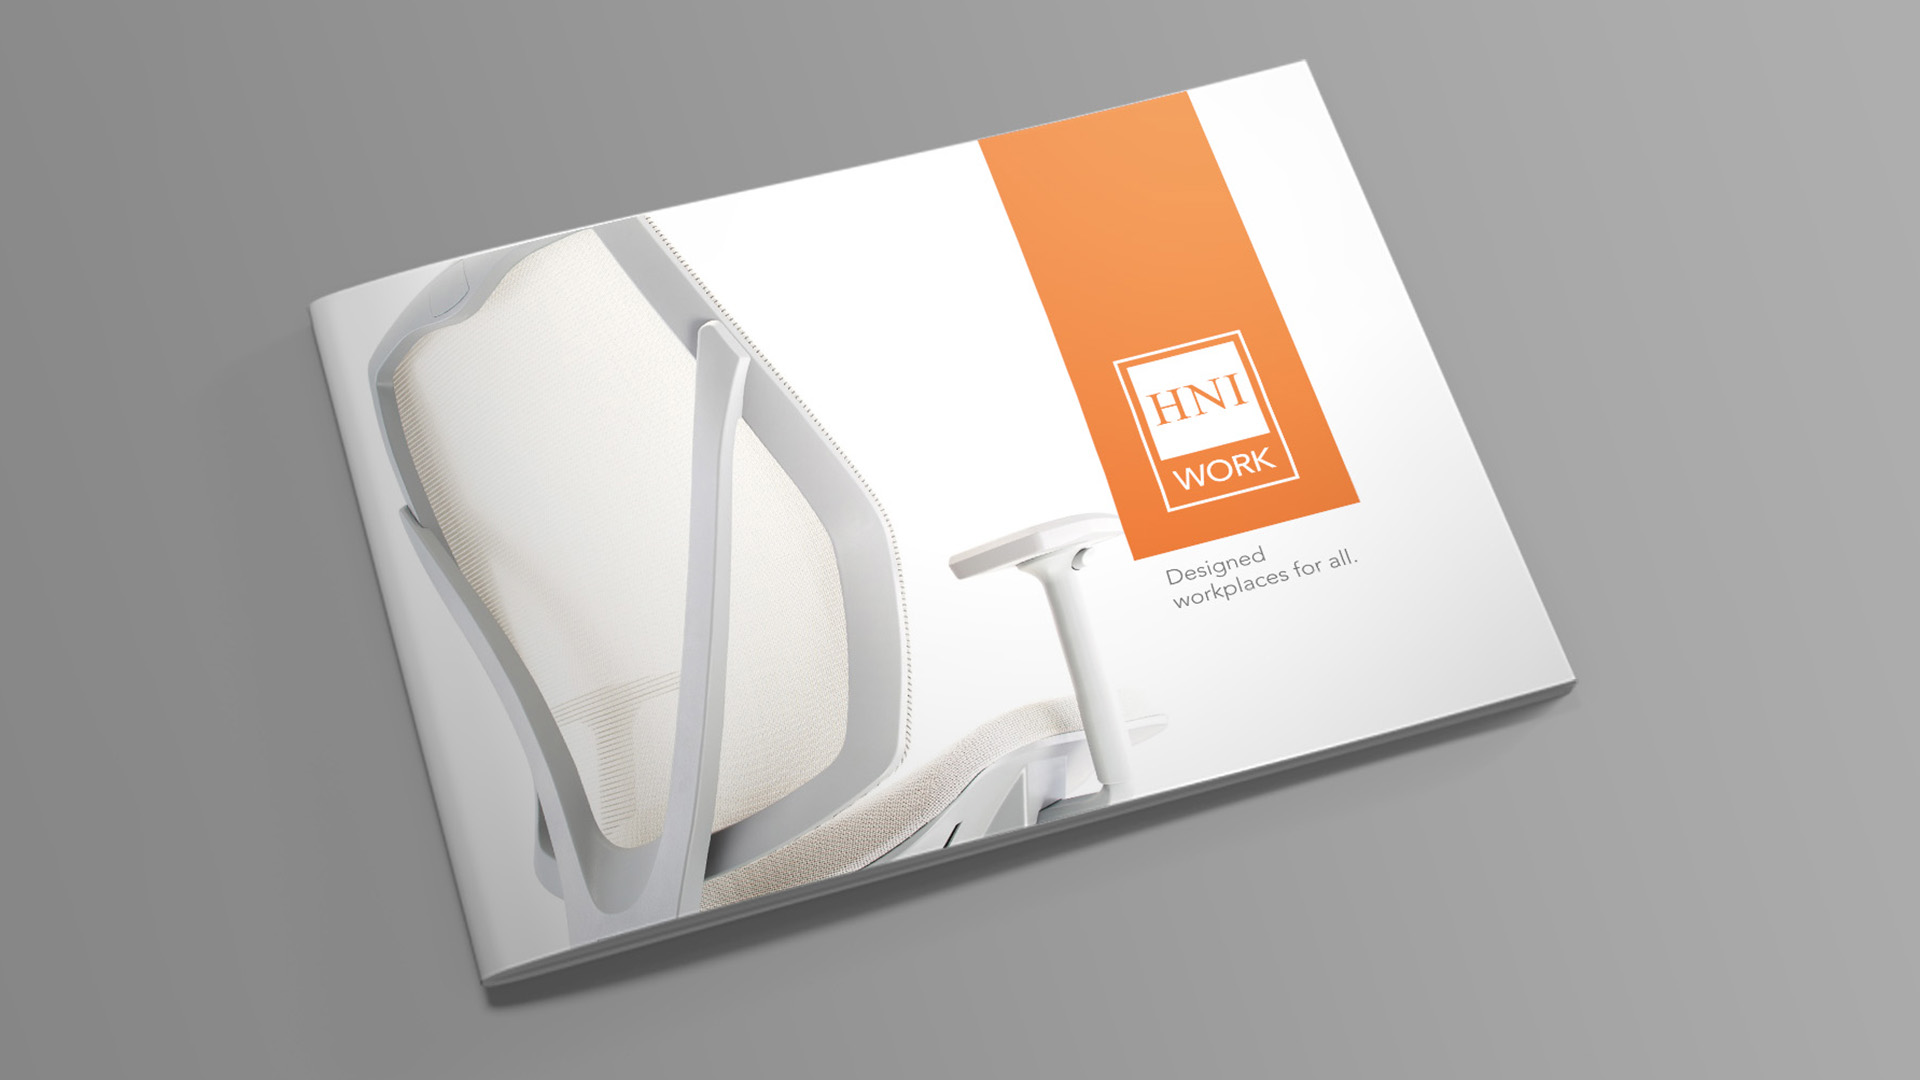 D2 Studio 市场营销策划, 品牌策划与平面设计公司的香港及广州中国团队为furniture brand安排平面设计与企业刊物设计graphic design and brochure design 3